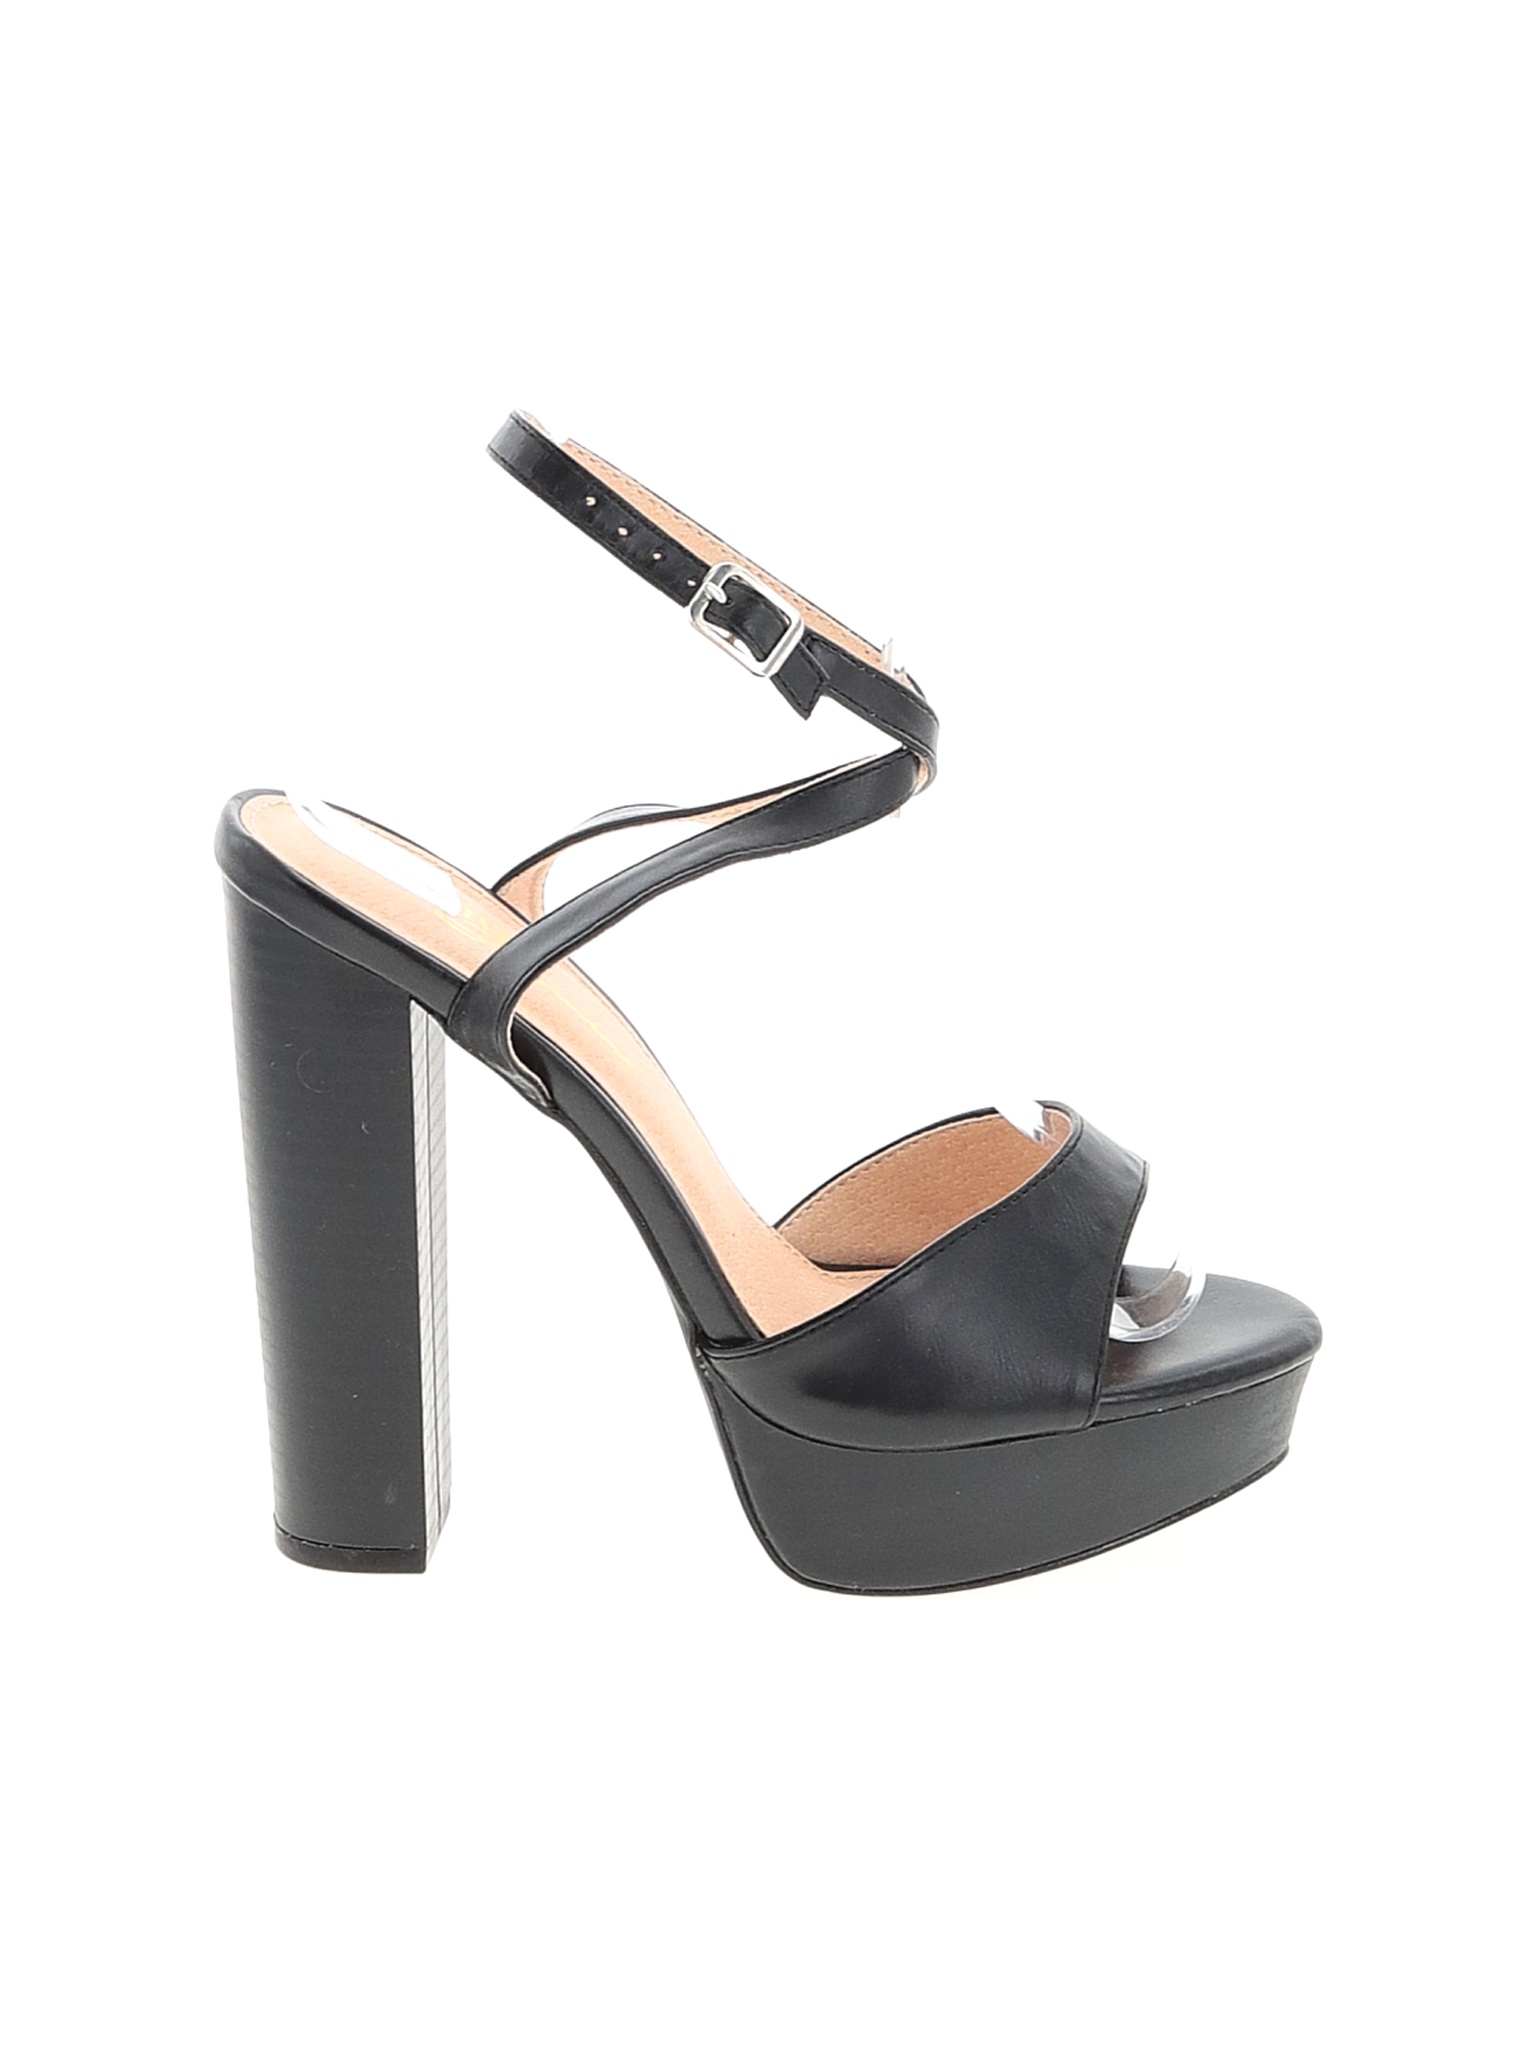 NWT Olivia Ferguson Women Black Heels US 7.5 | eBay